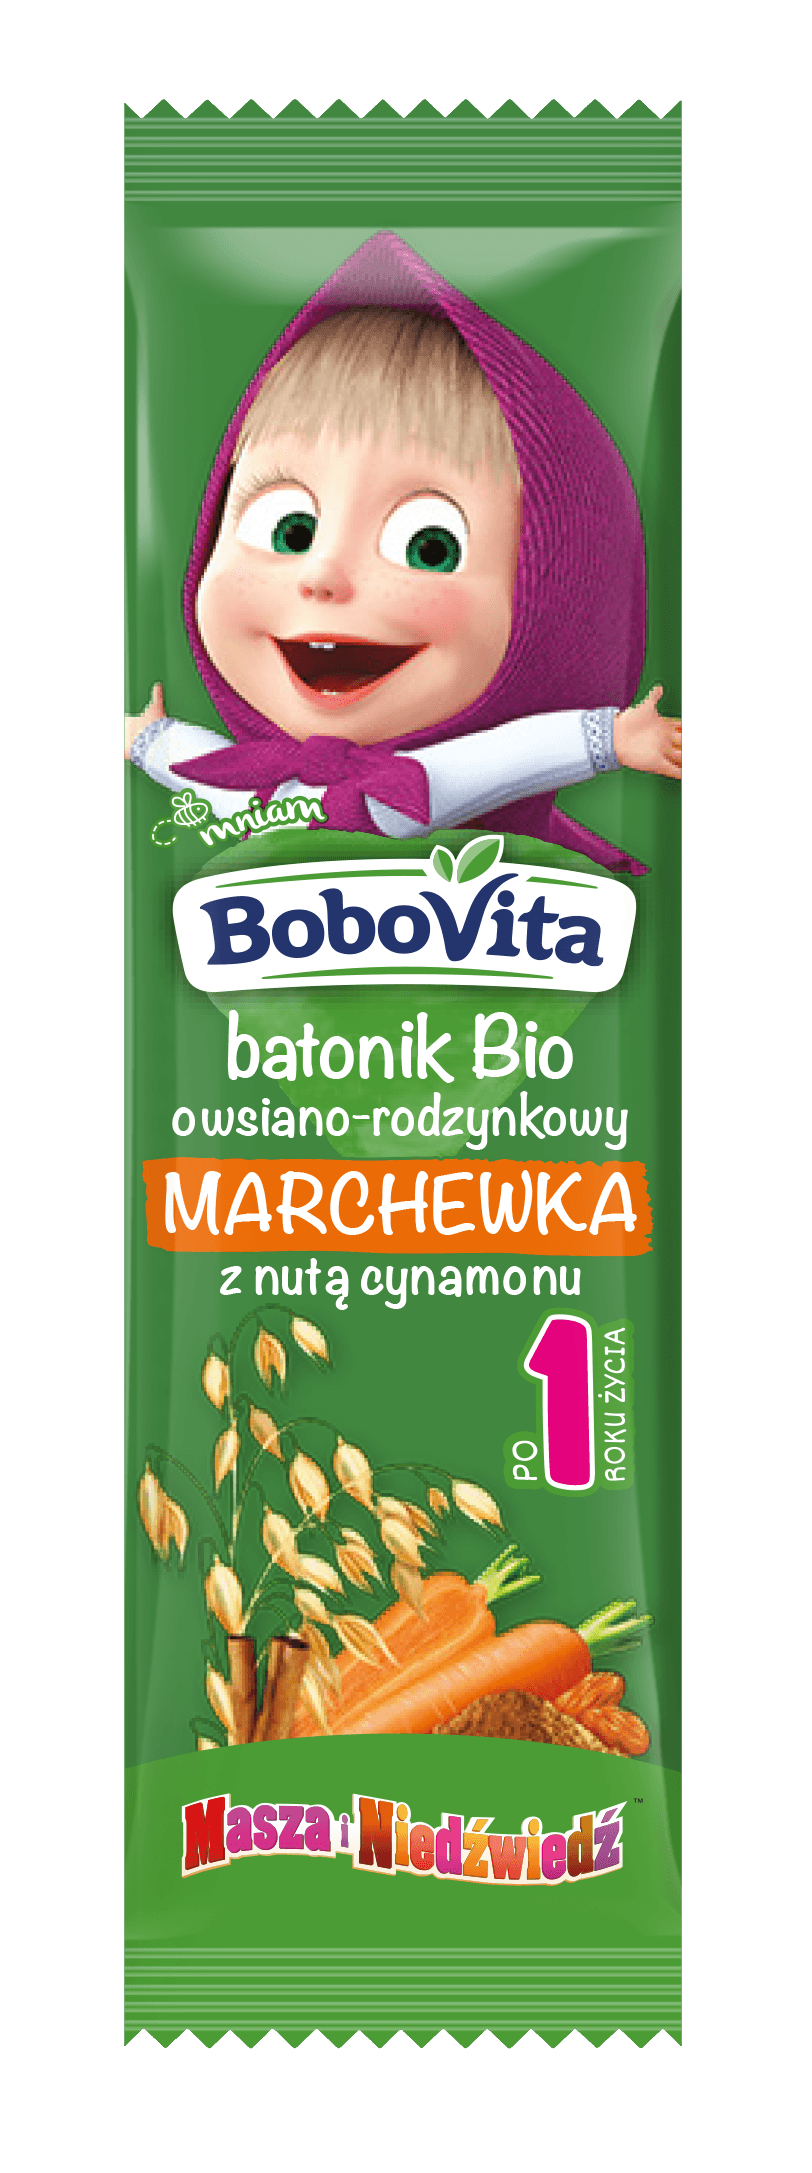 https://bobovita-media-dep.s3.amazonaws.com/media/original_images/5900852048951_batonik_bio_marchewka.png